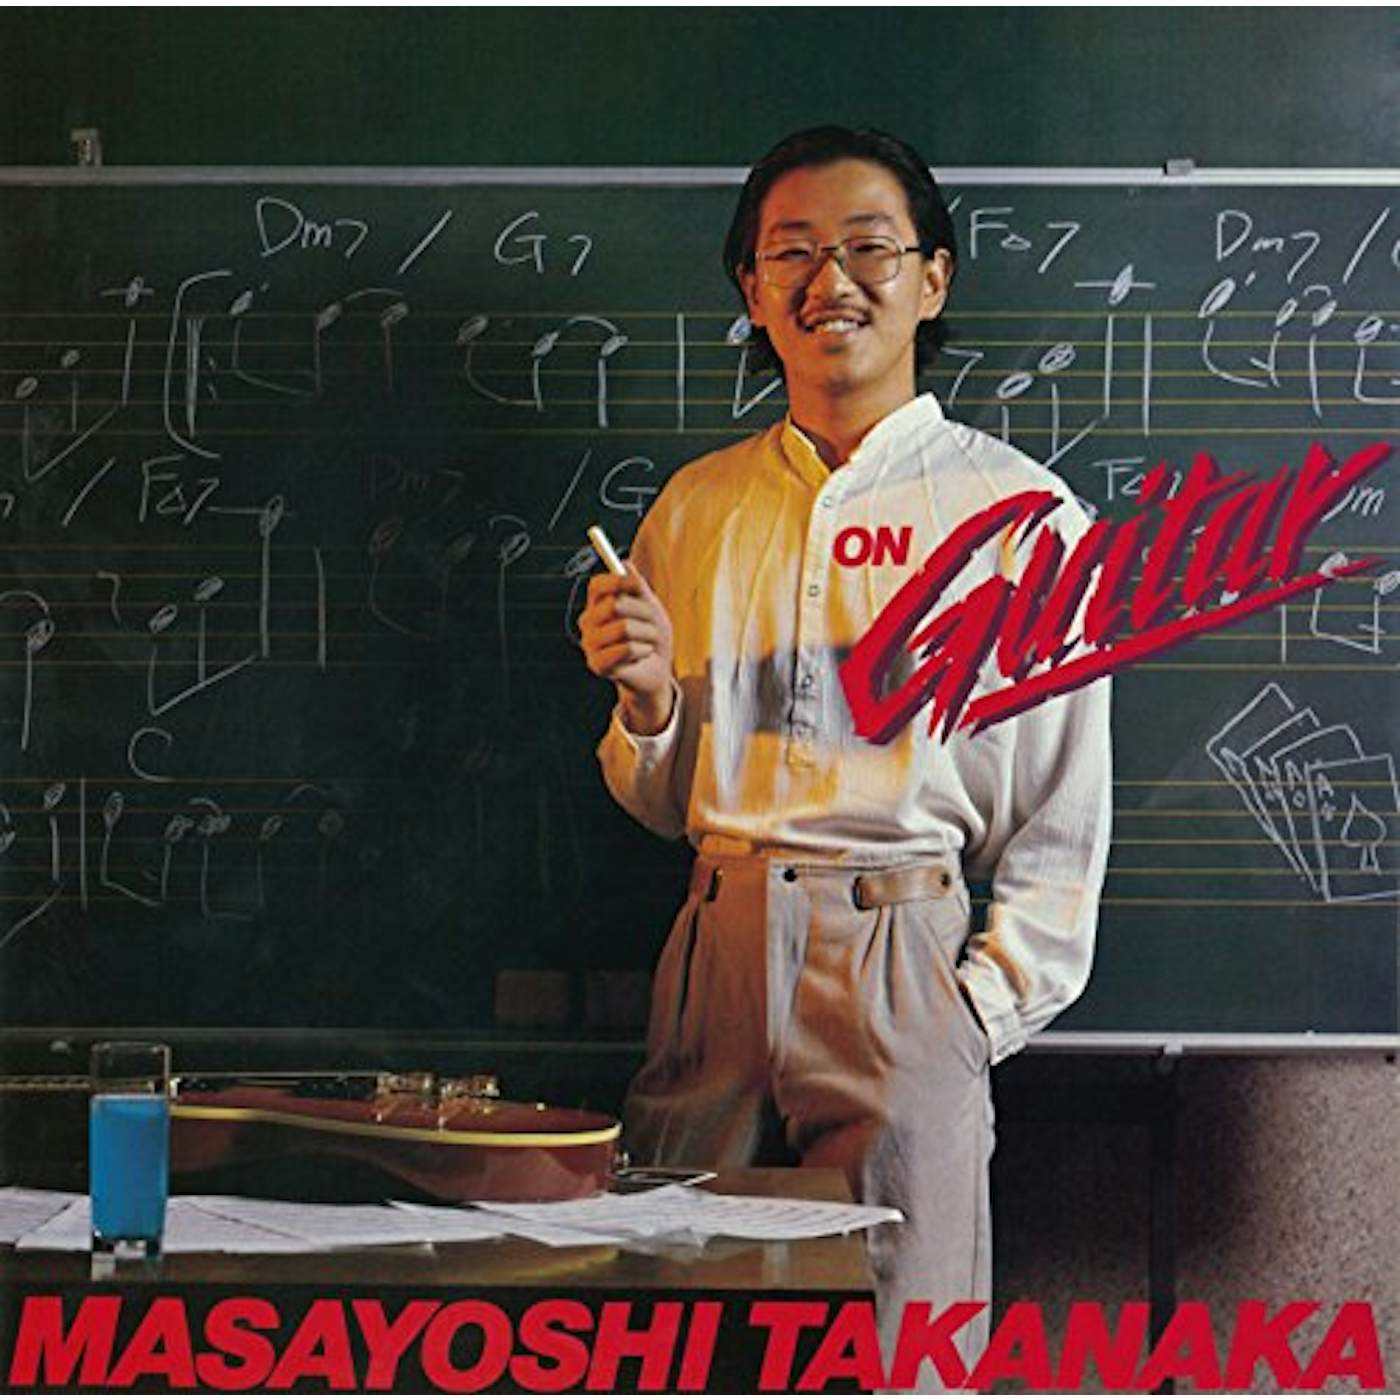 Masayoshi Takanaka ON GUITAR CD